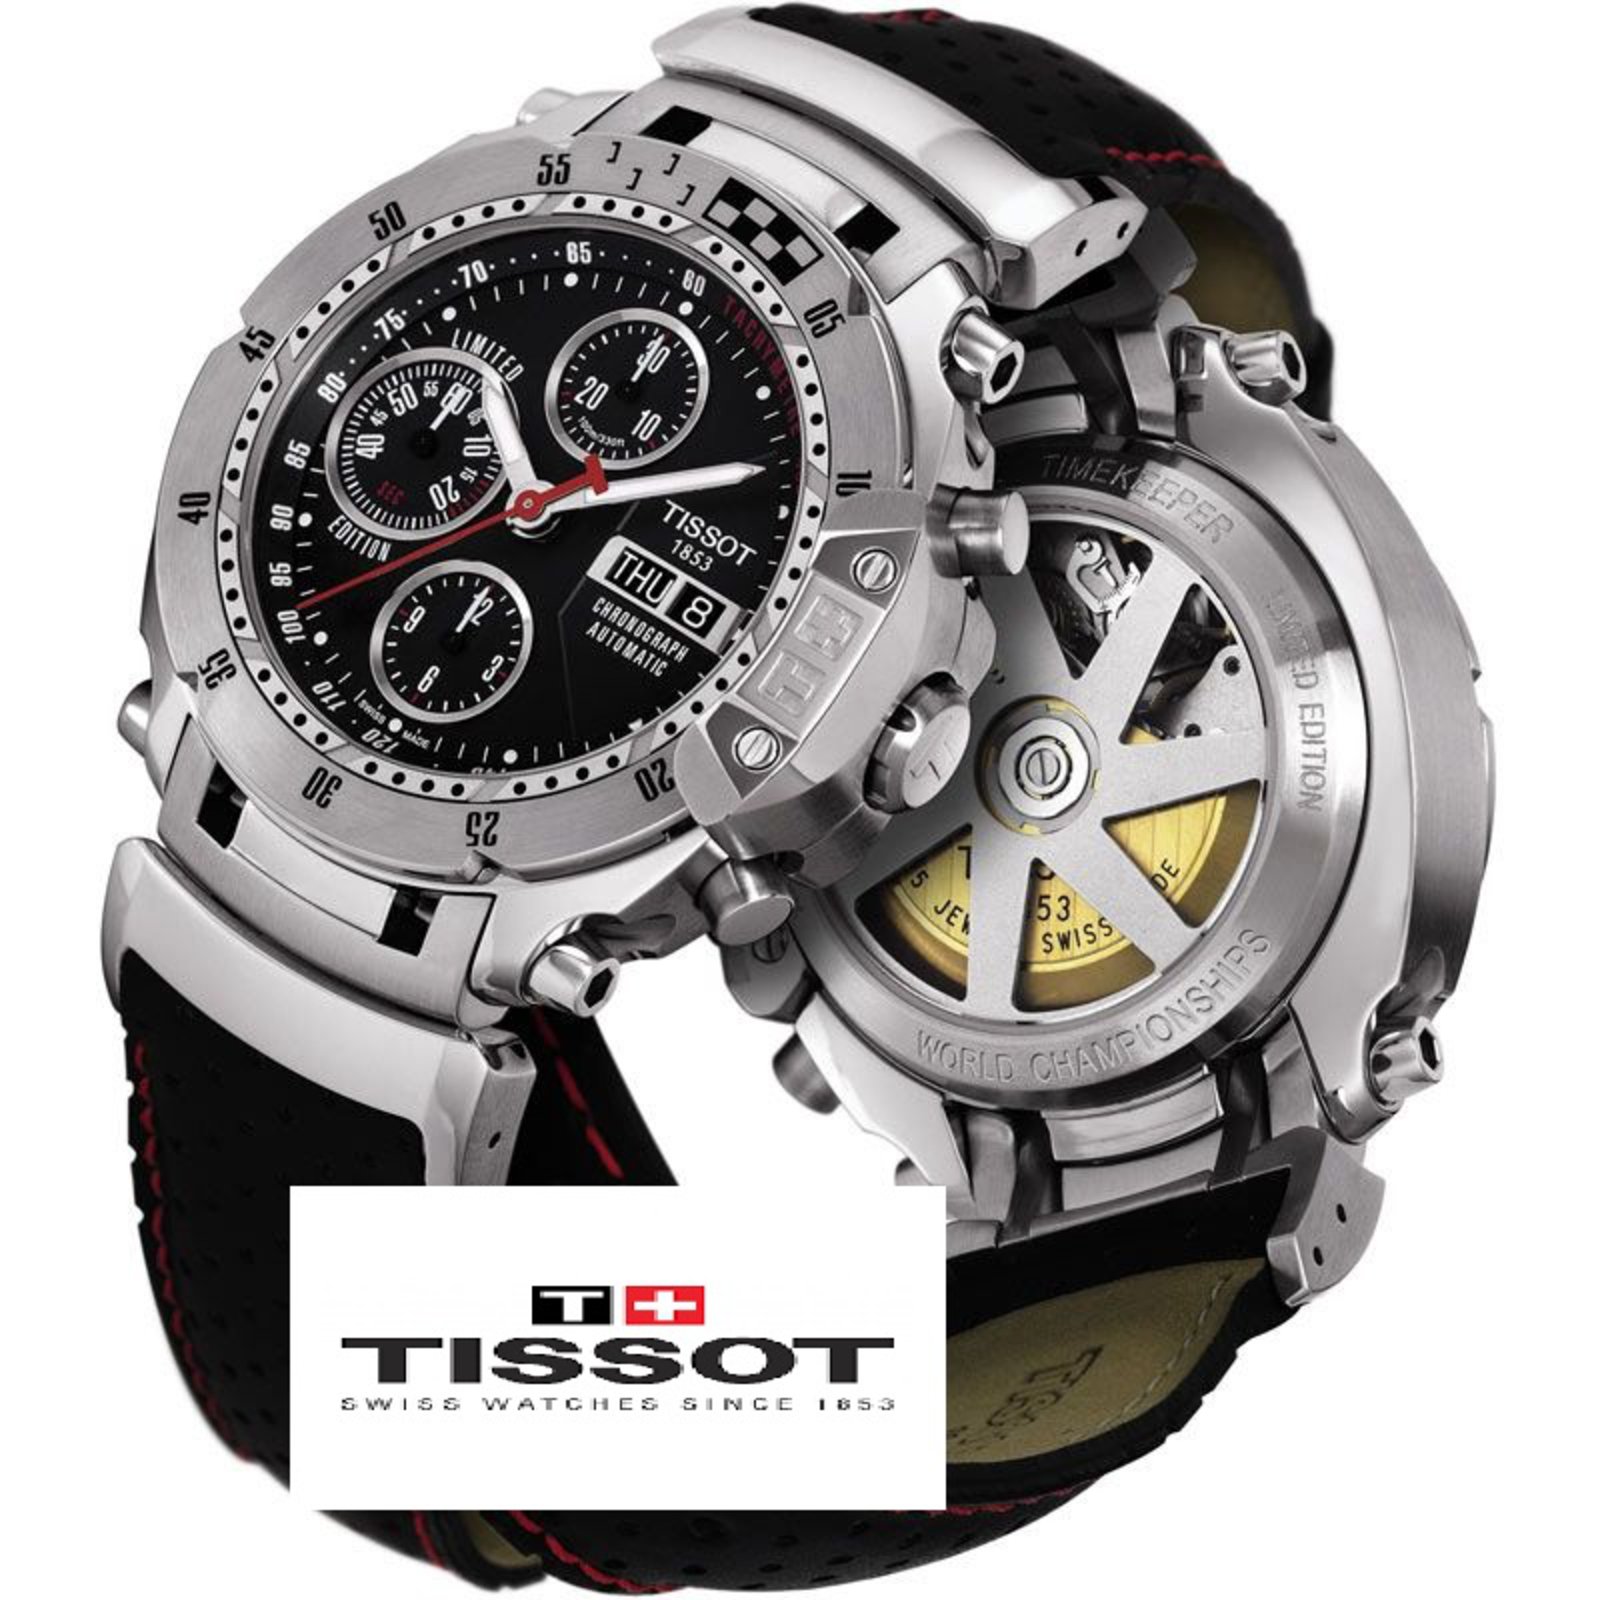 Tissot MOTOGP Limited Edition 2014